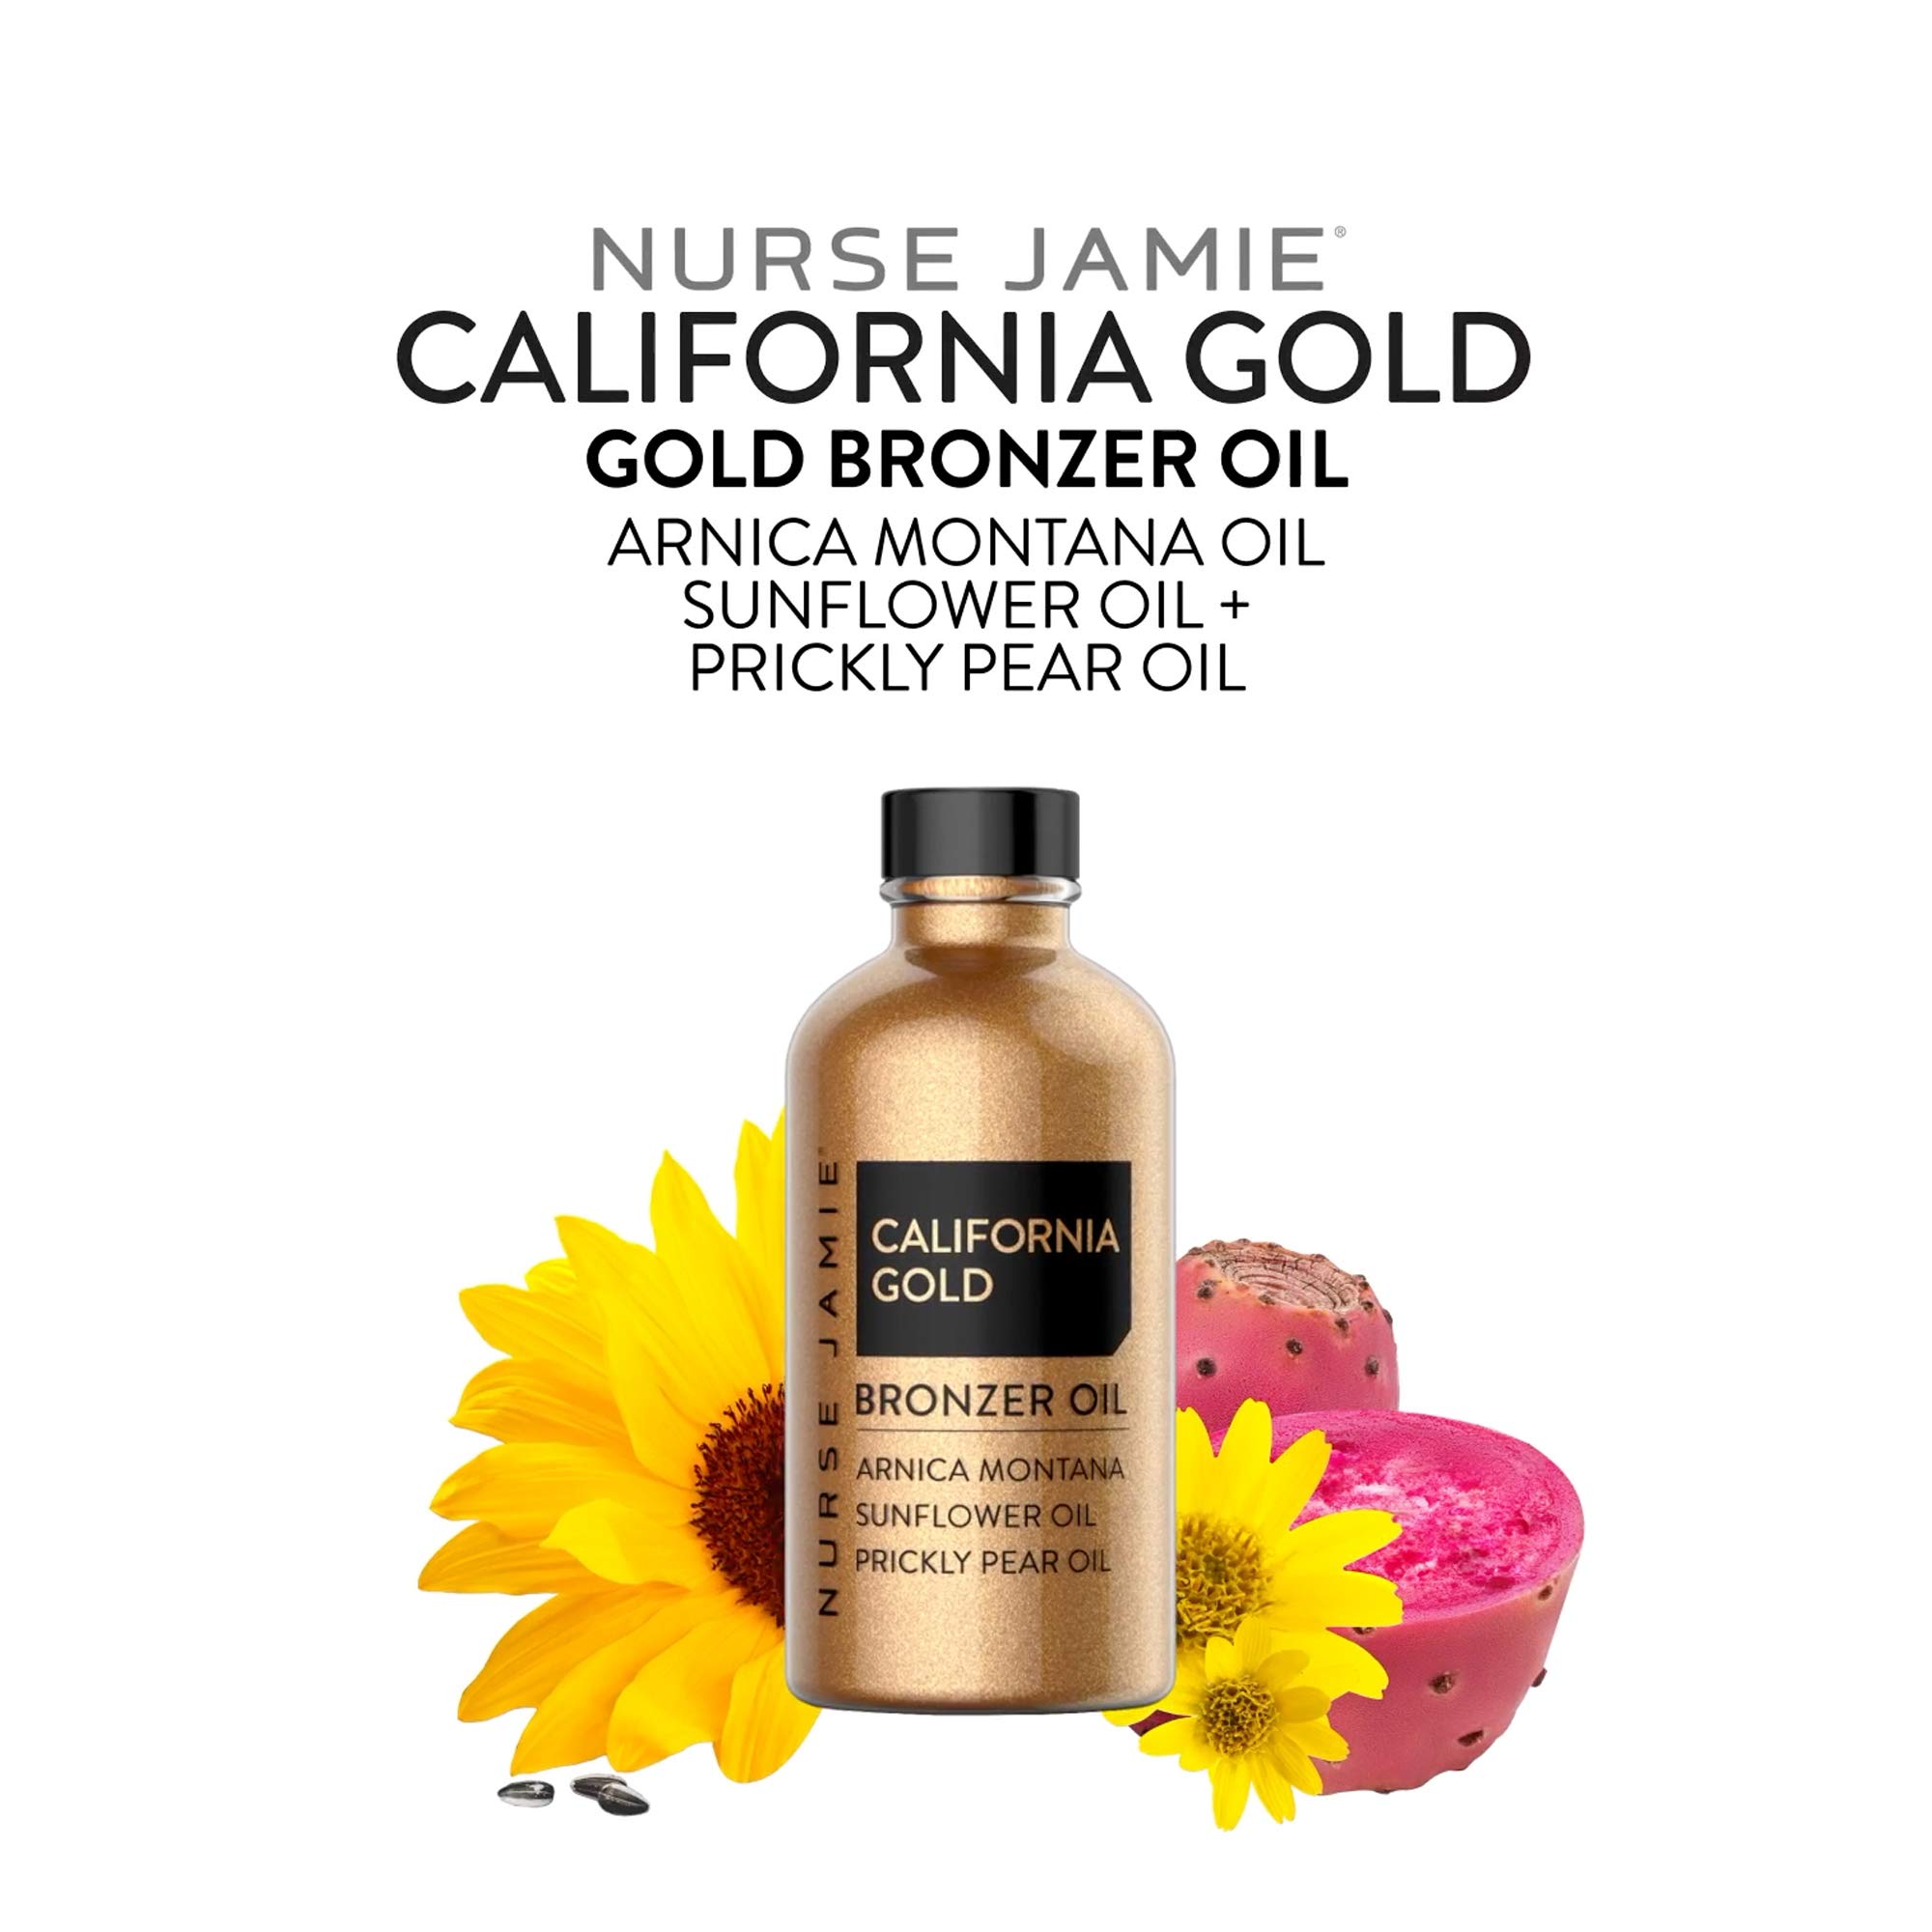 Nurse Jamie Nurse Jamie California Gold Bronzer Oil, 4 Oz